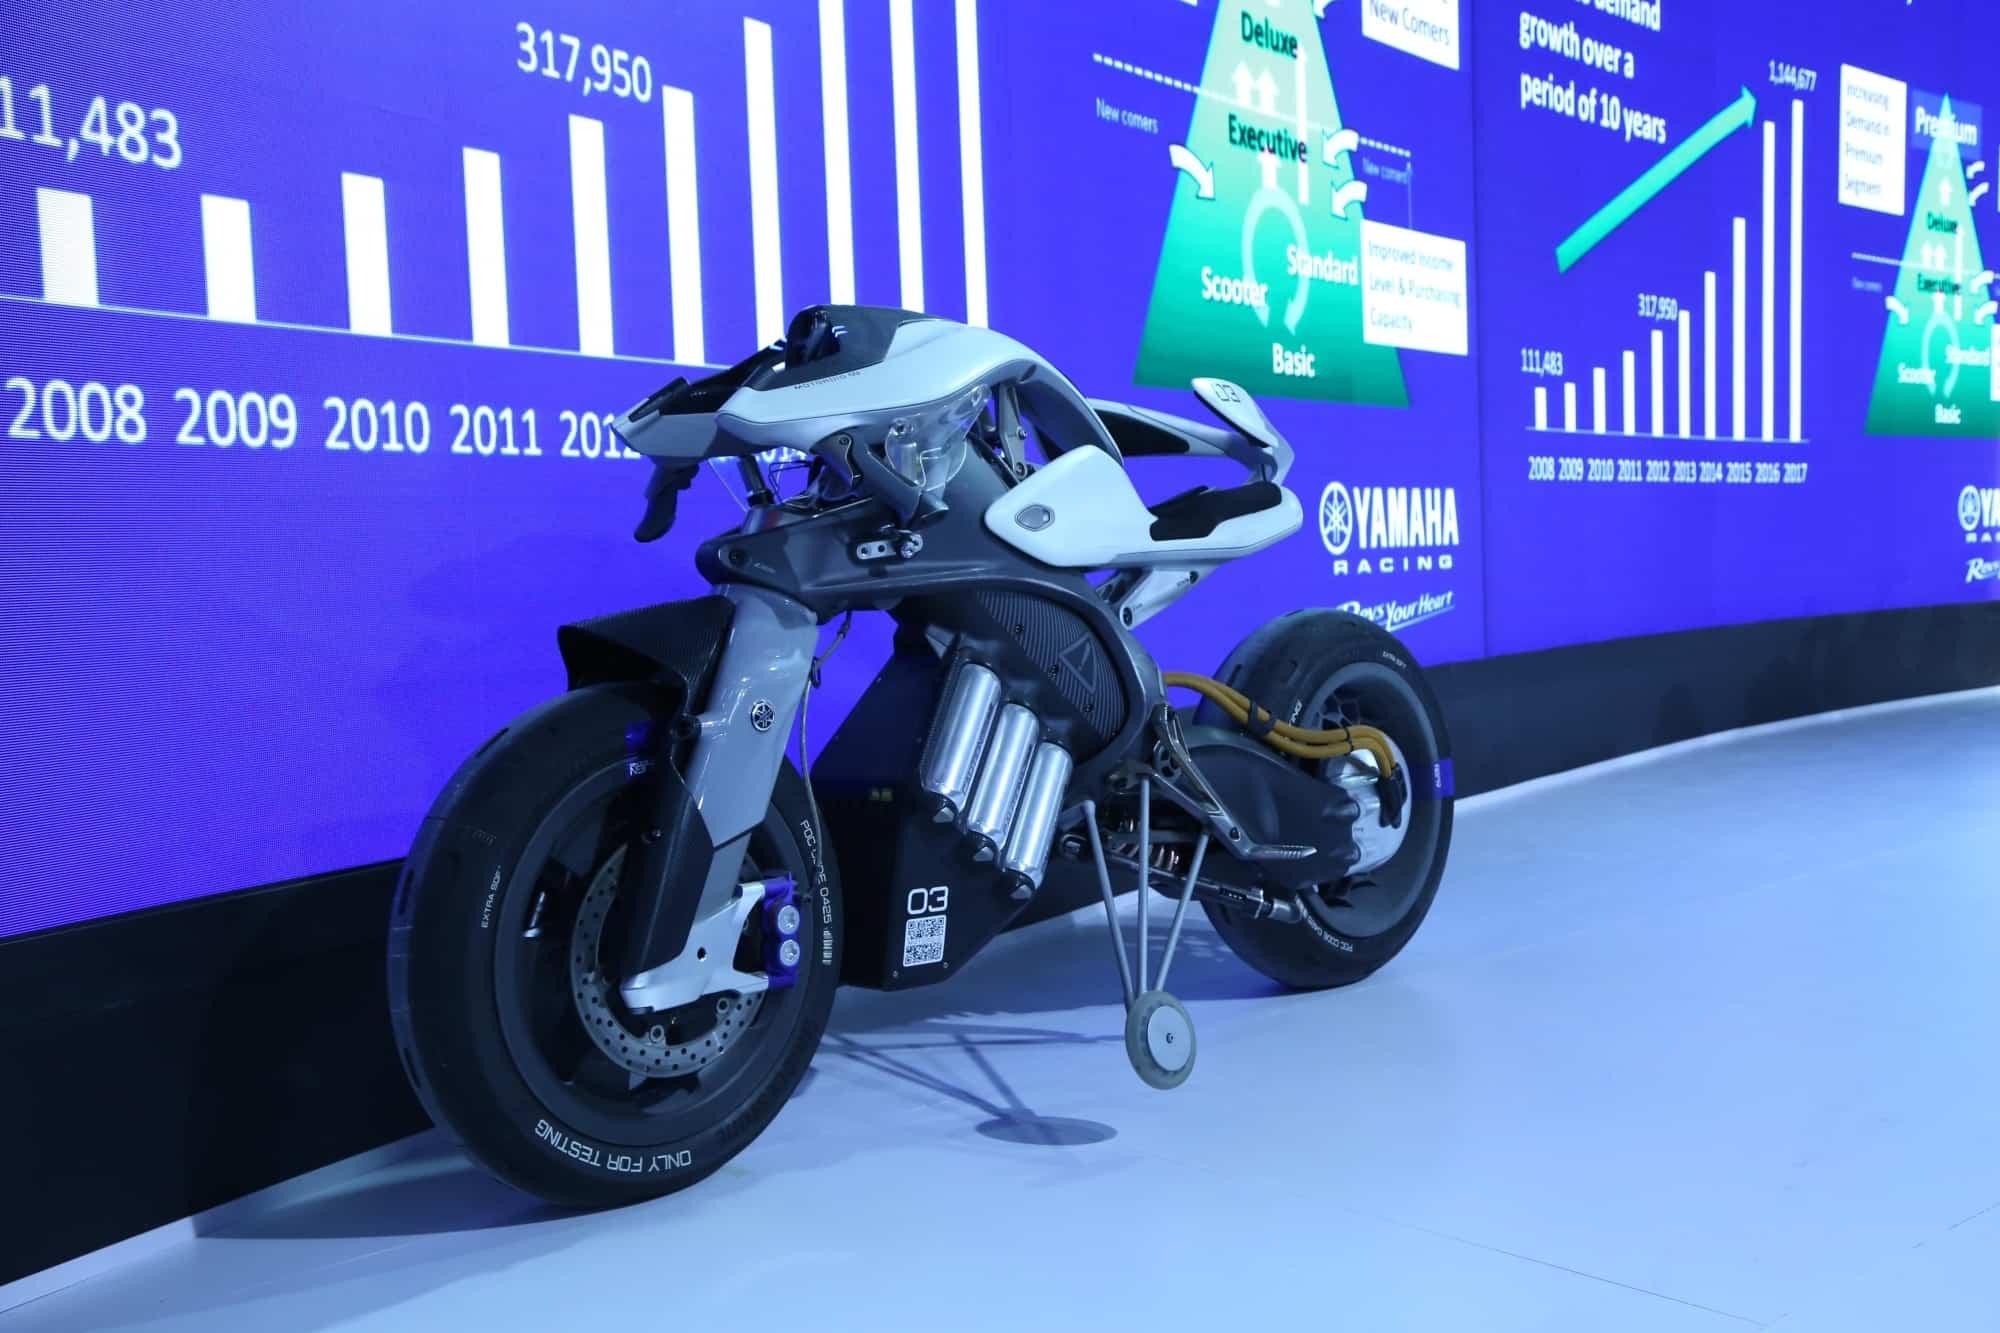 A Yamaha bike at the Auto Expo 2018 in New Delhi. Source: IANS